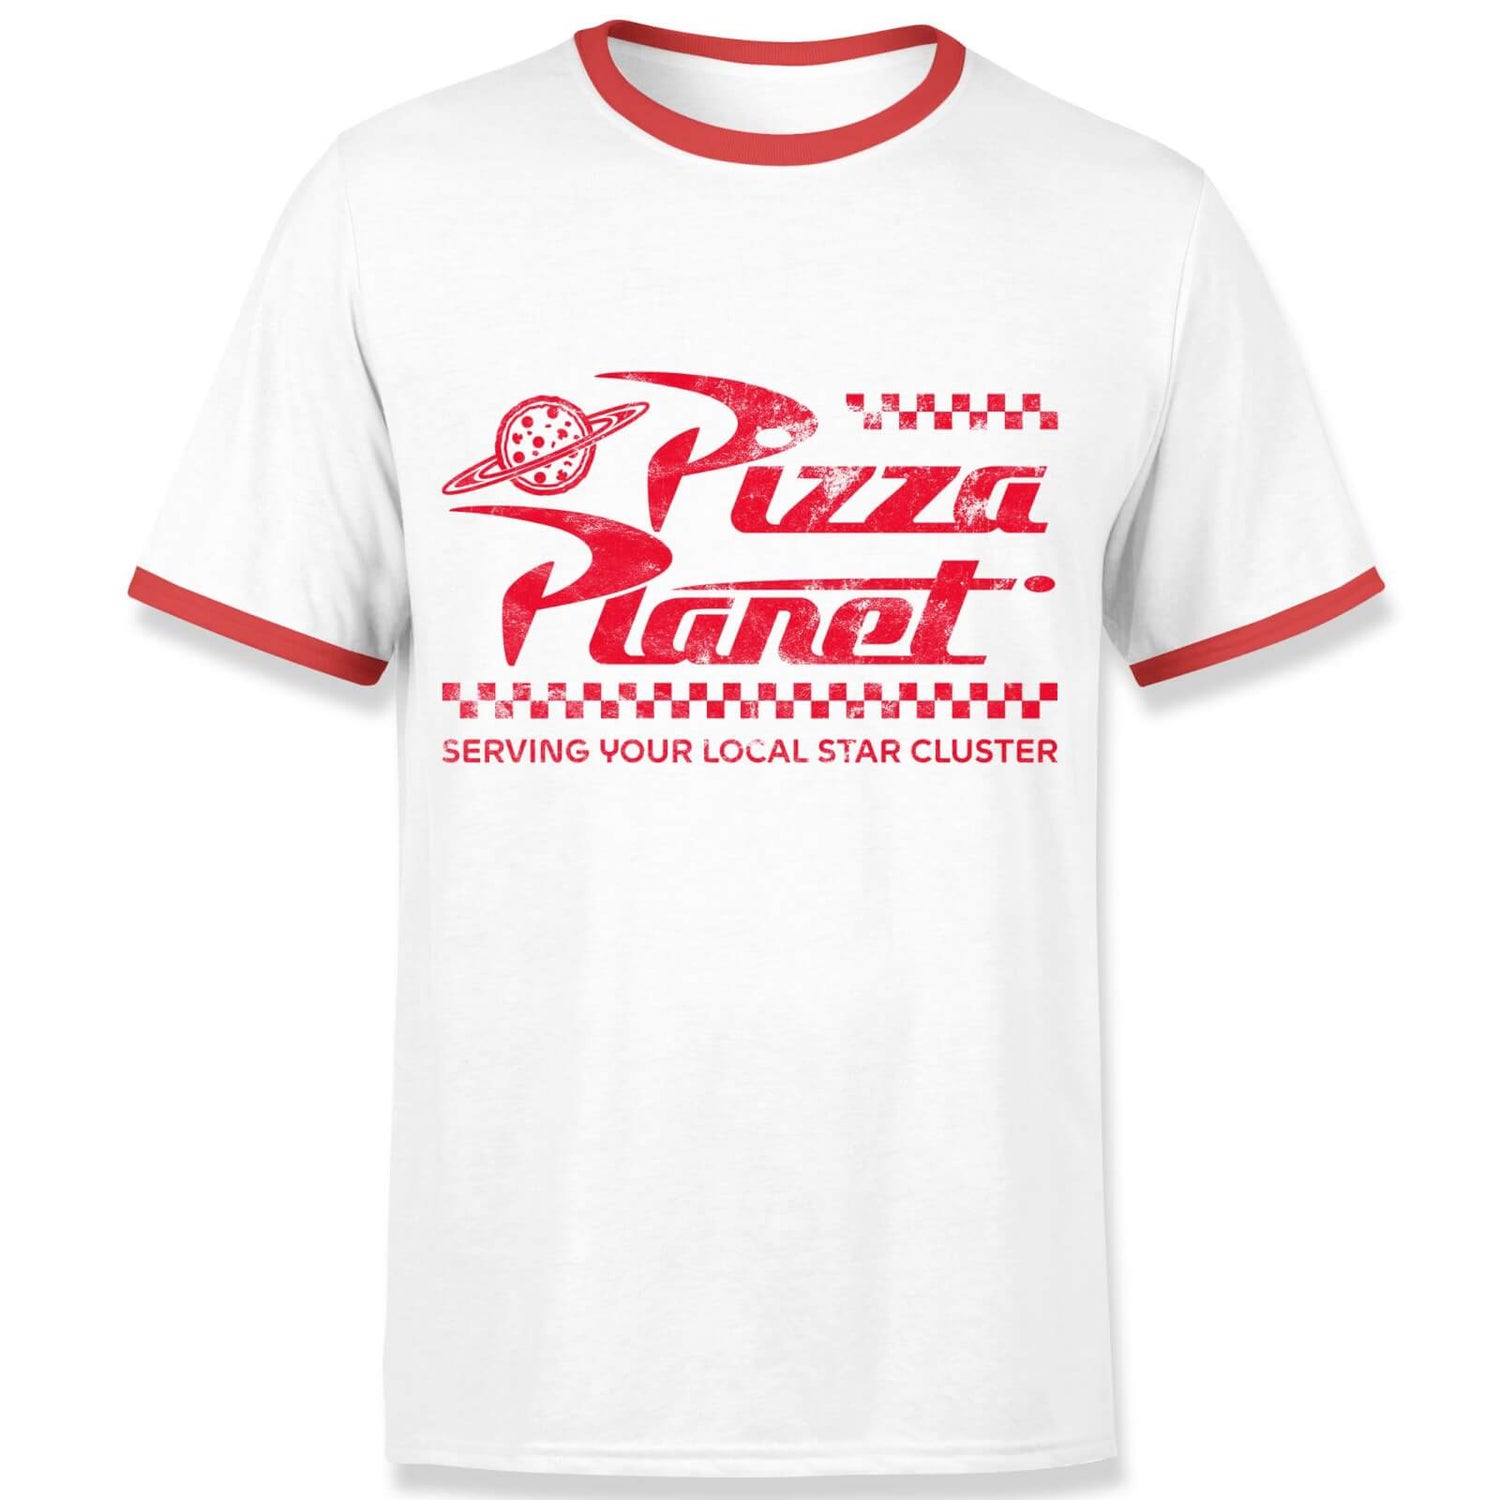 Toy Story x Pizza Planet Men's Ringer T-Shirt - White/Red